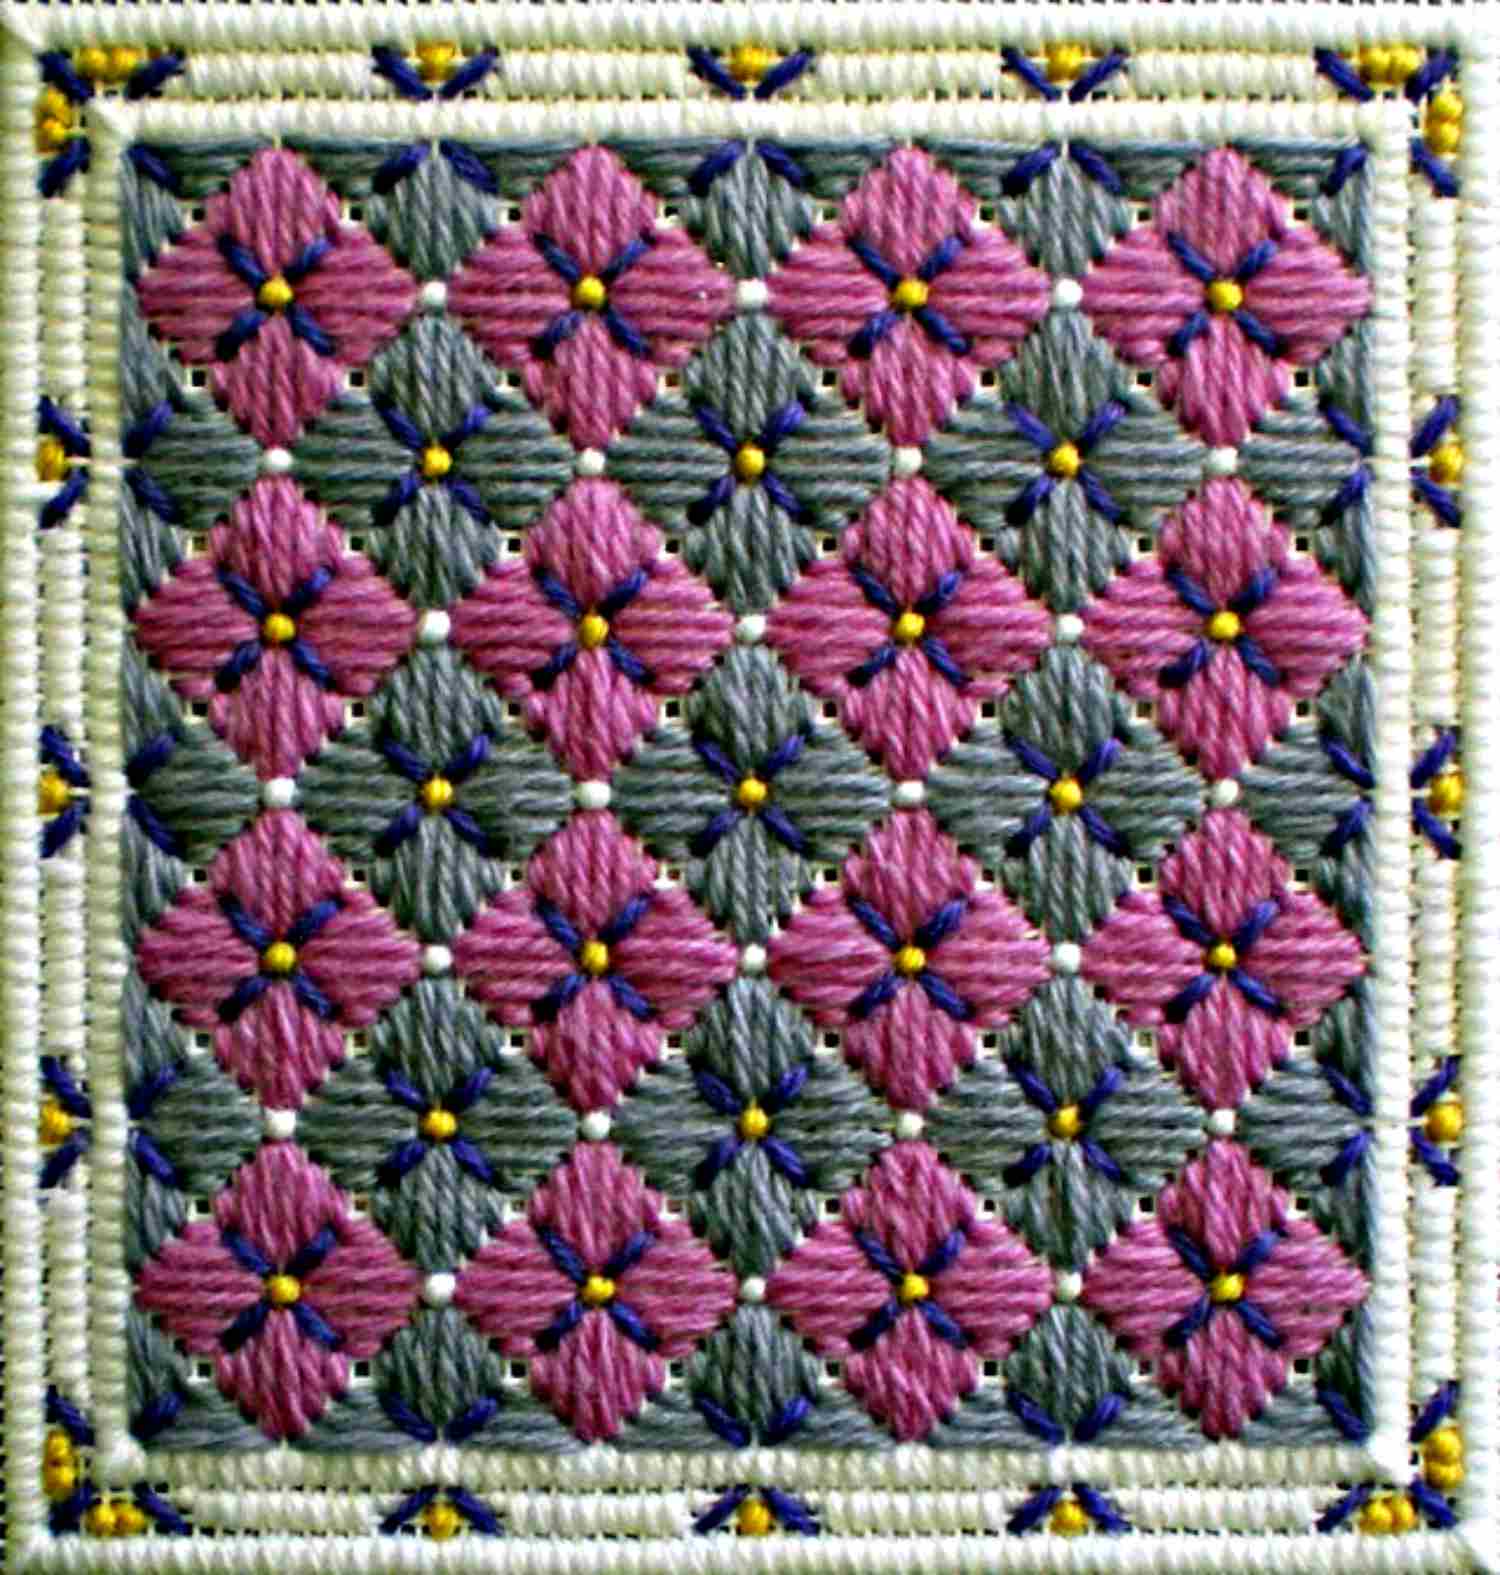 Stitched Hydrangea Needlepoint Project